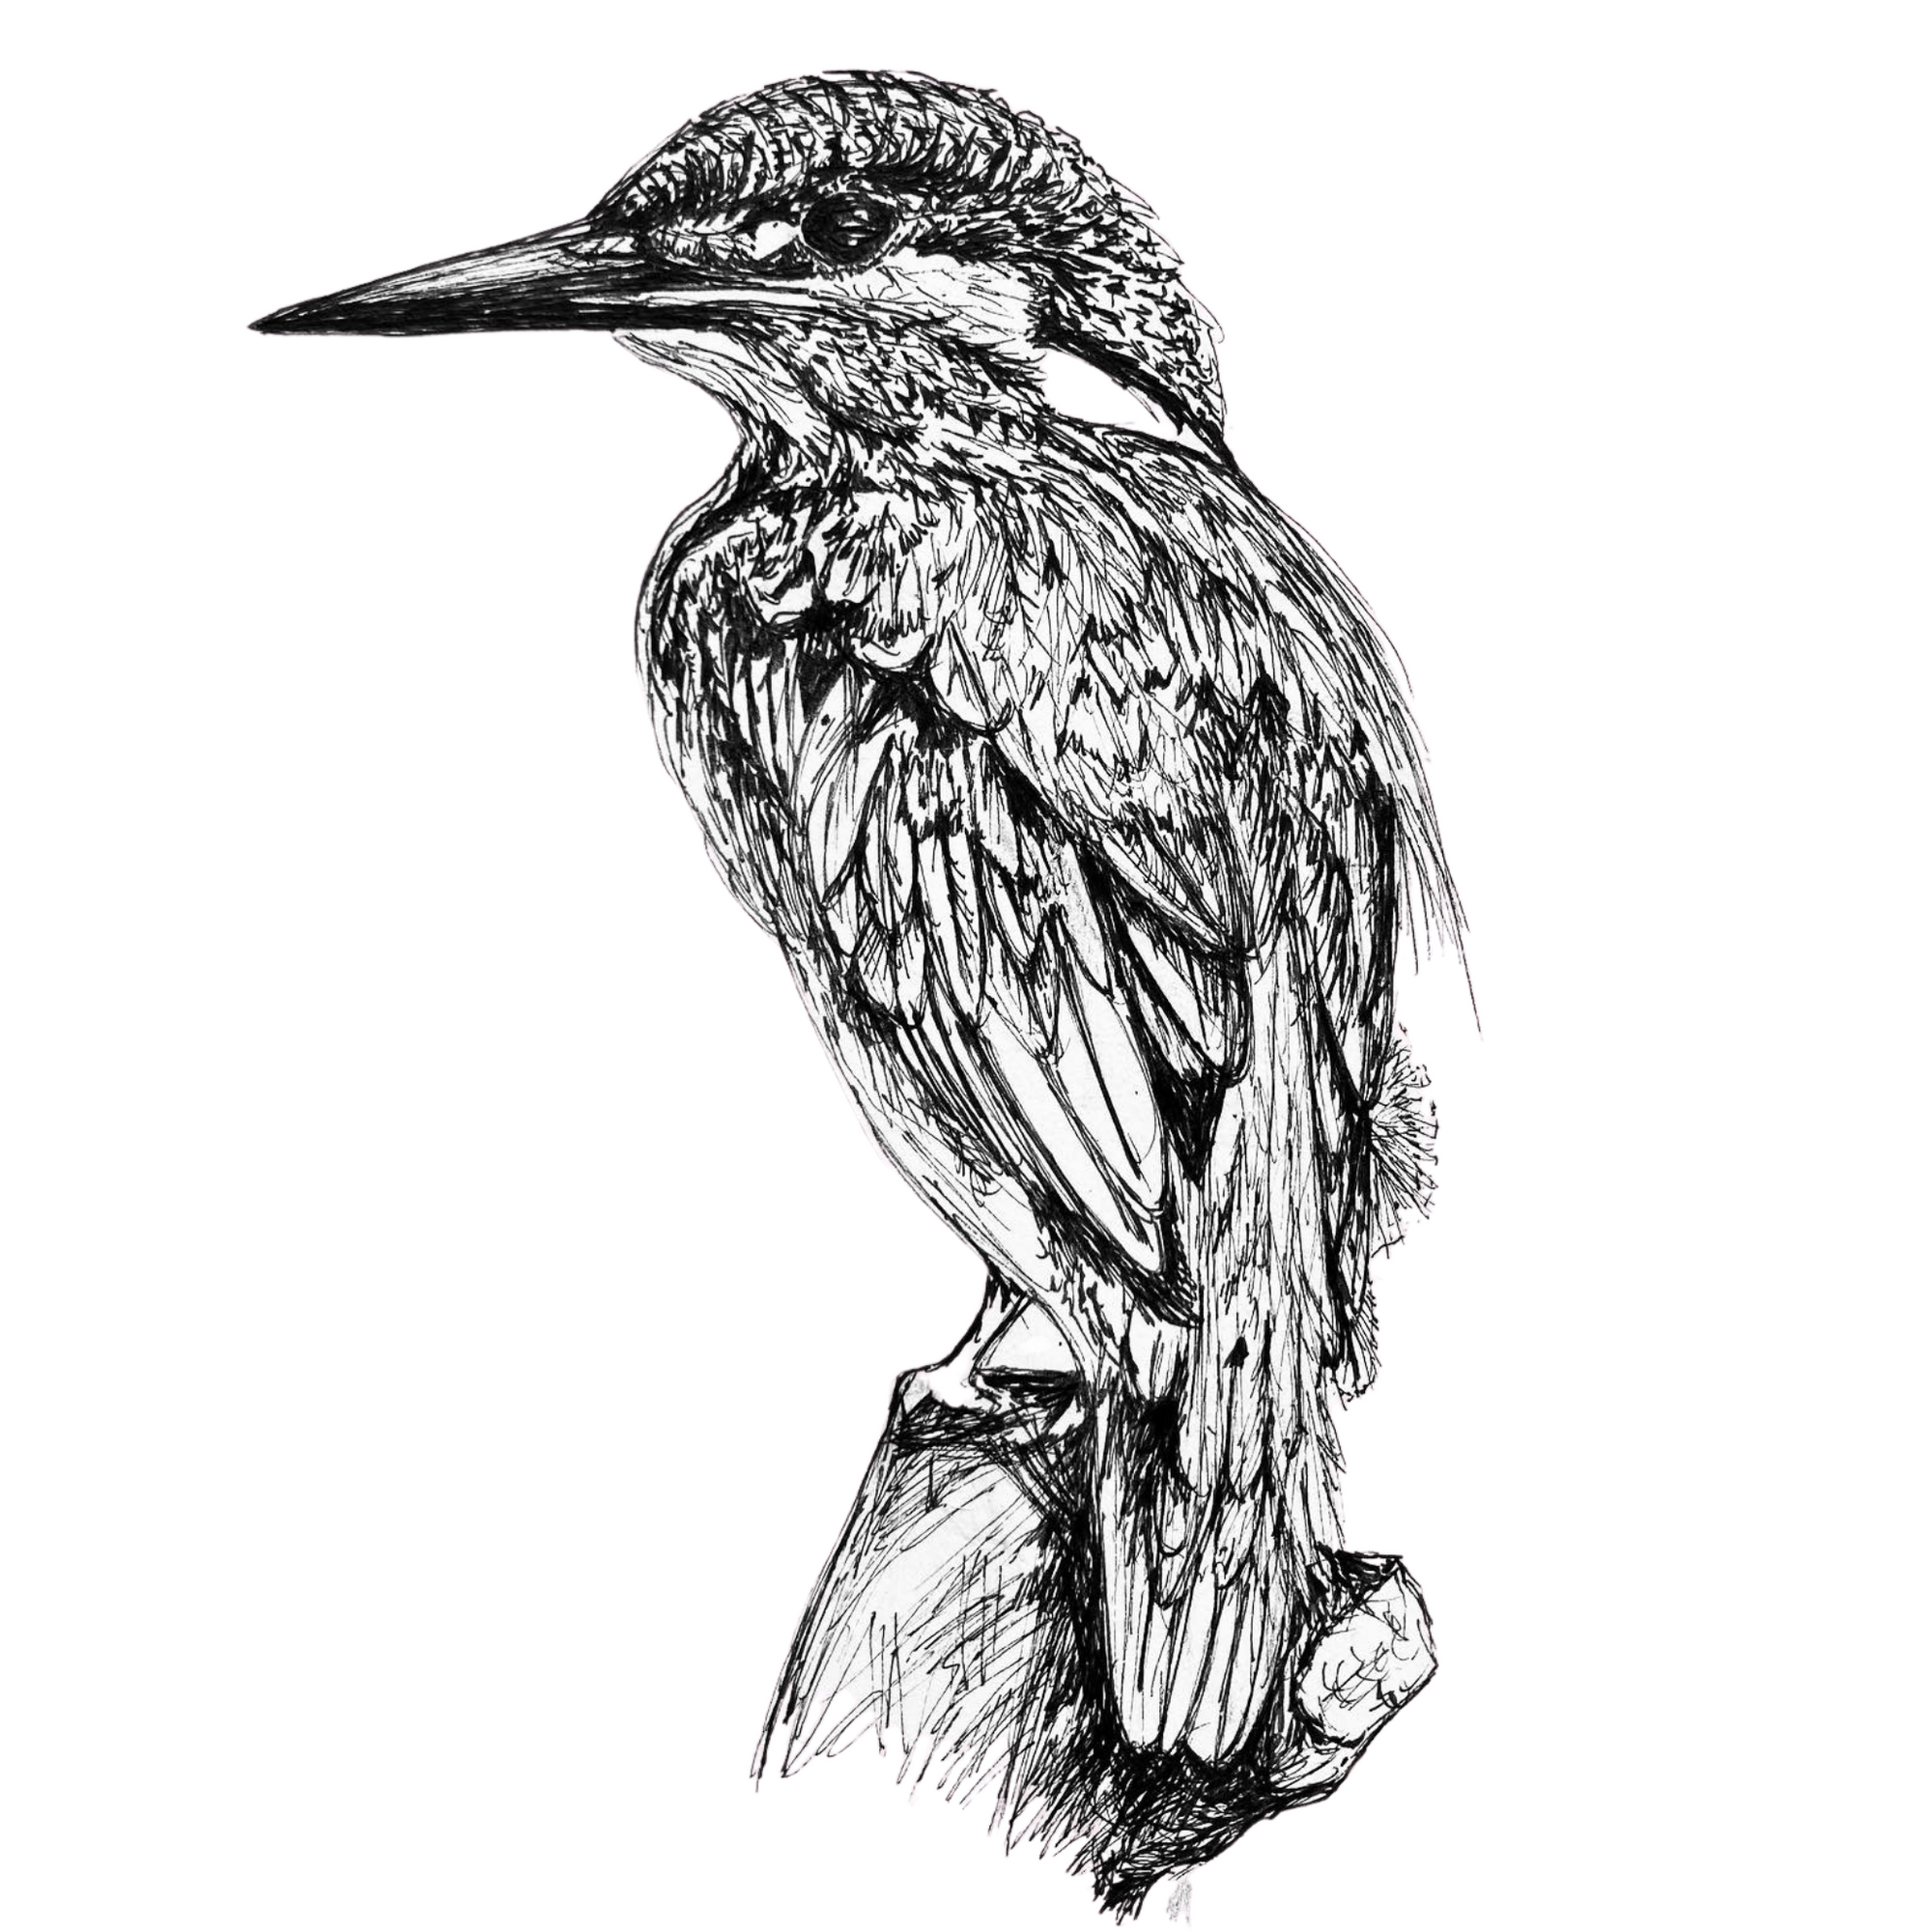 Kingfisher- Original Pen & Ink Illustration